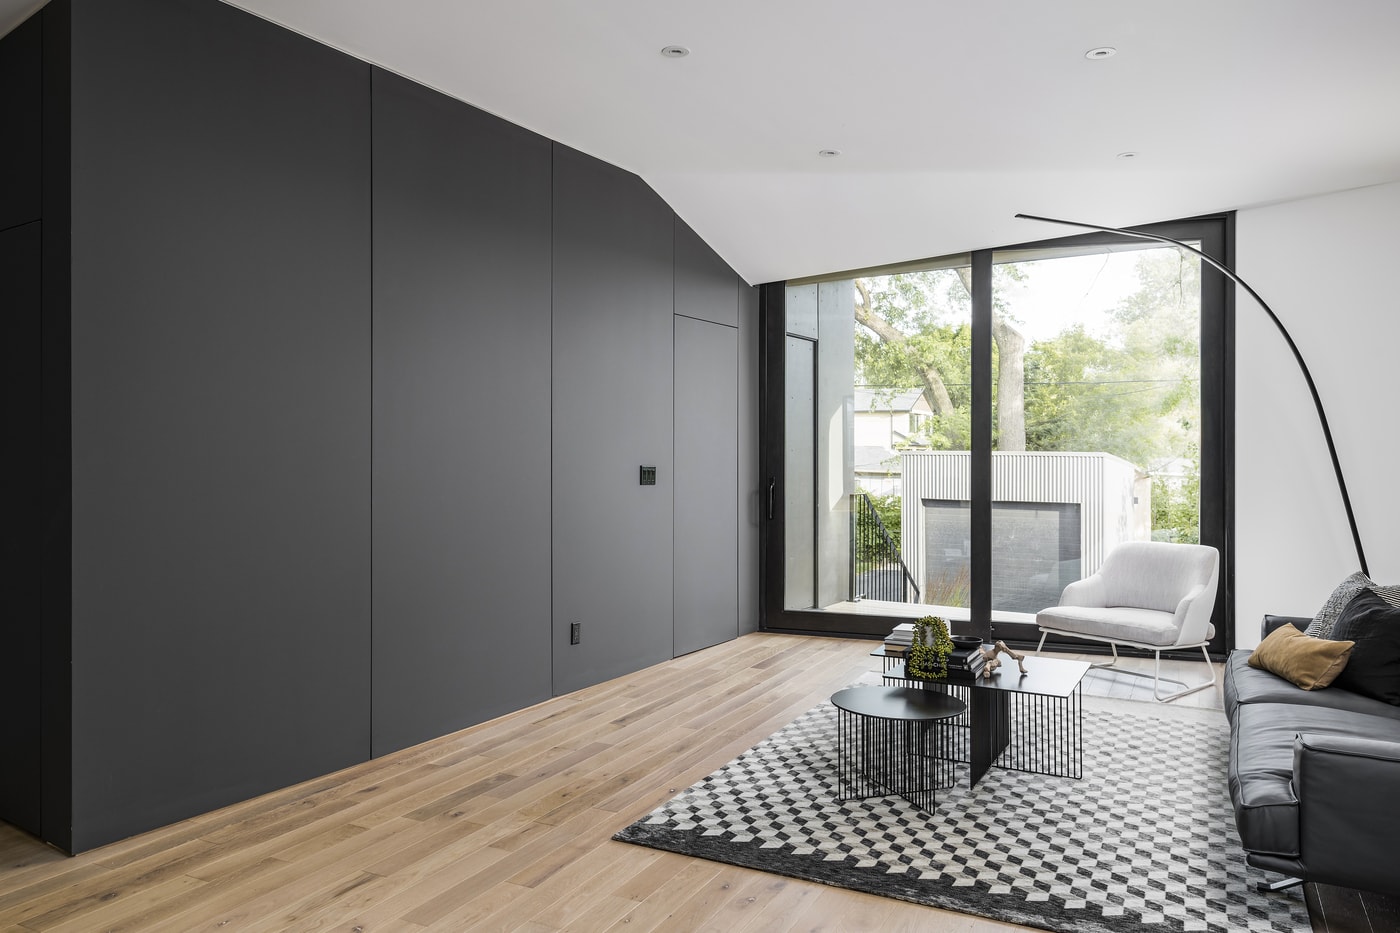 PHAEDRUS Studio's Tesseract House homes design architecture  